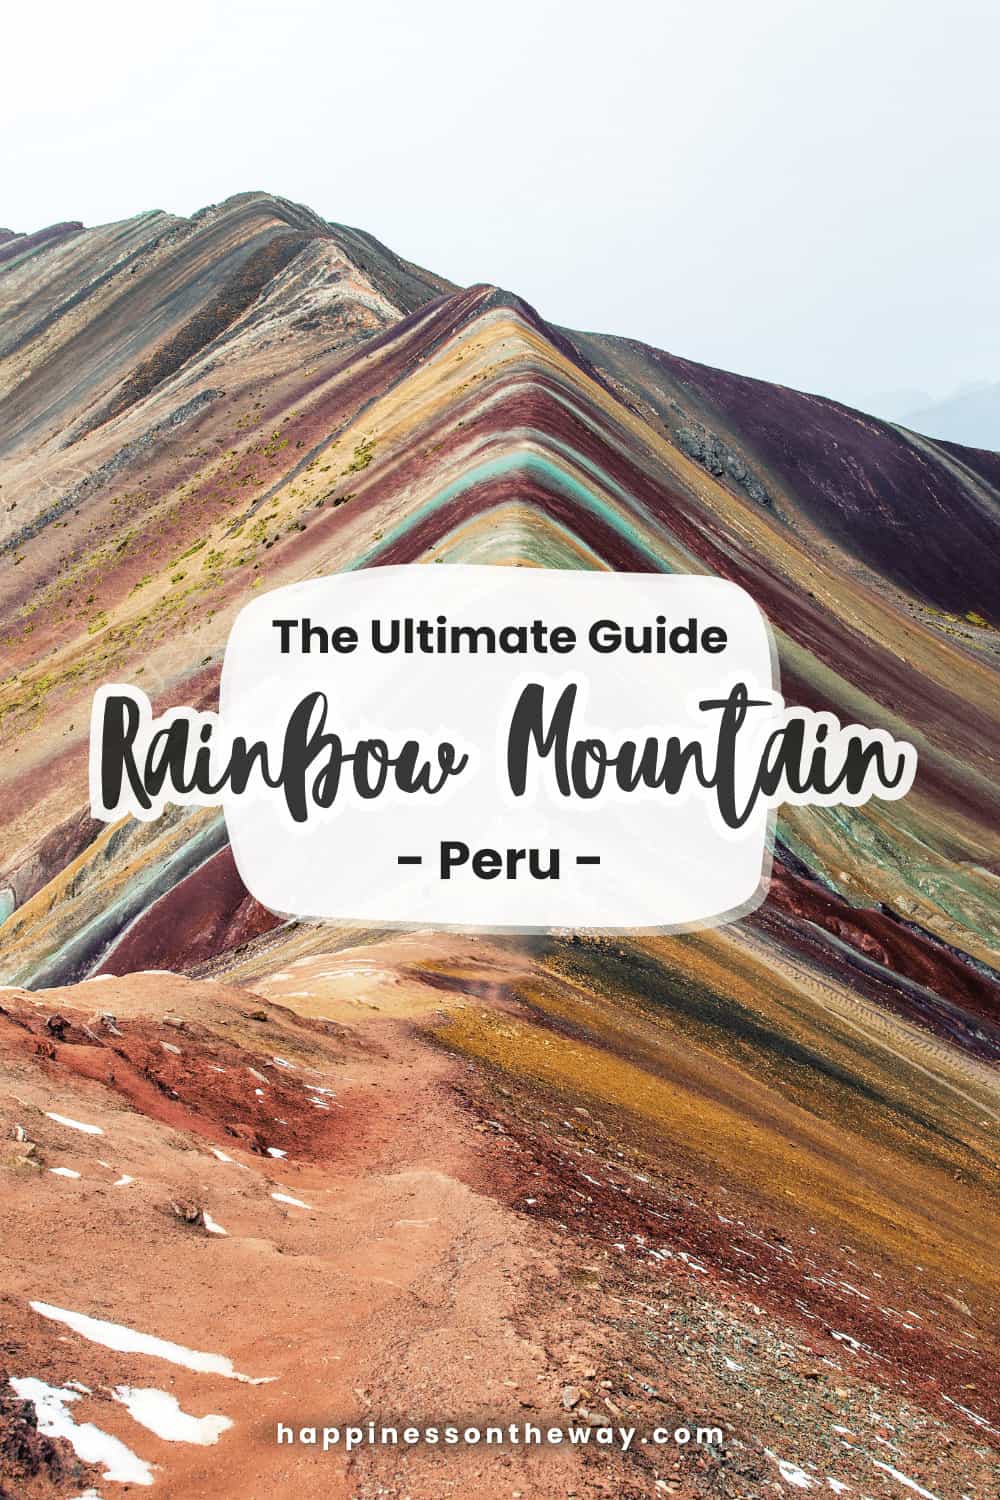 The Ultimate Guide Rainbow Mountain Peru